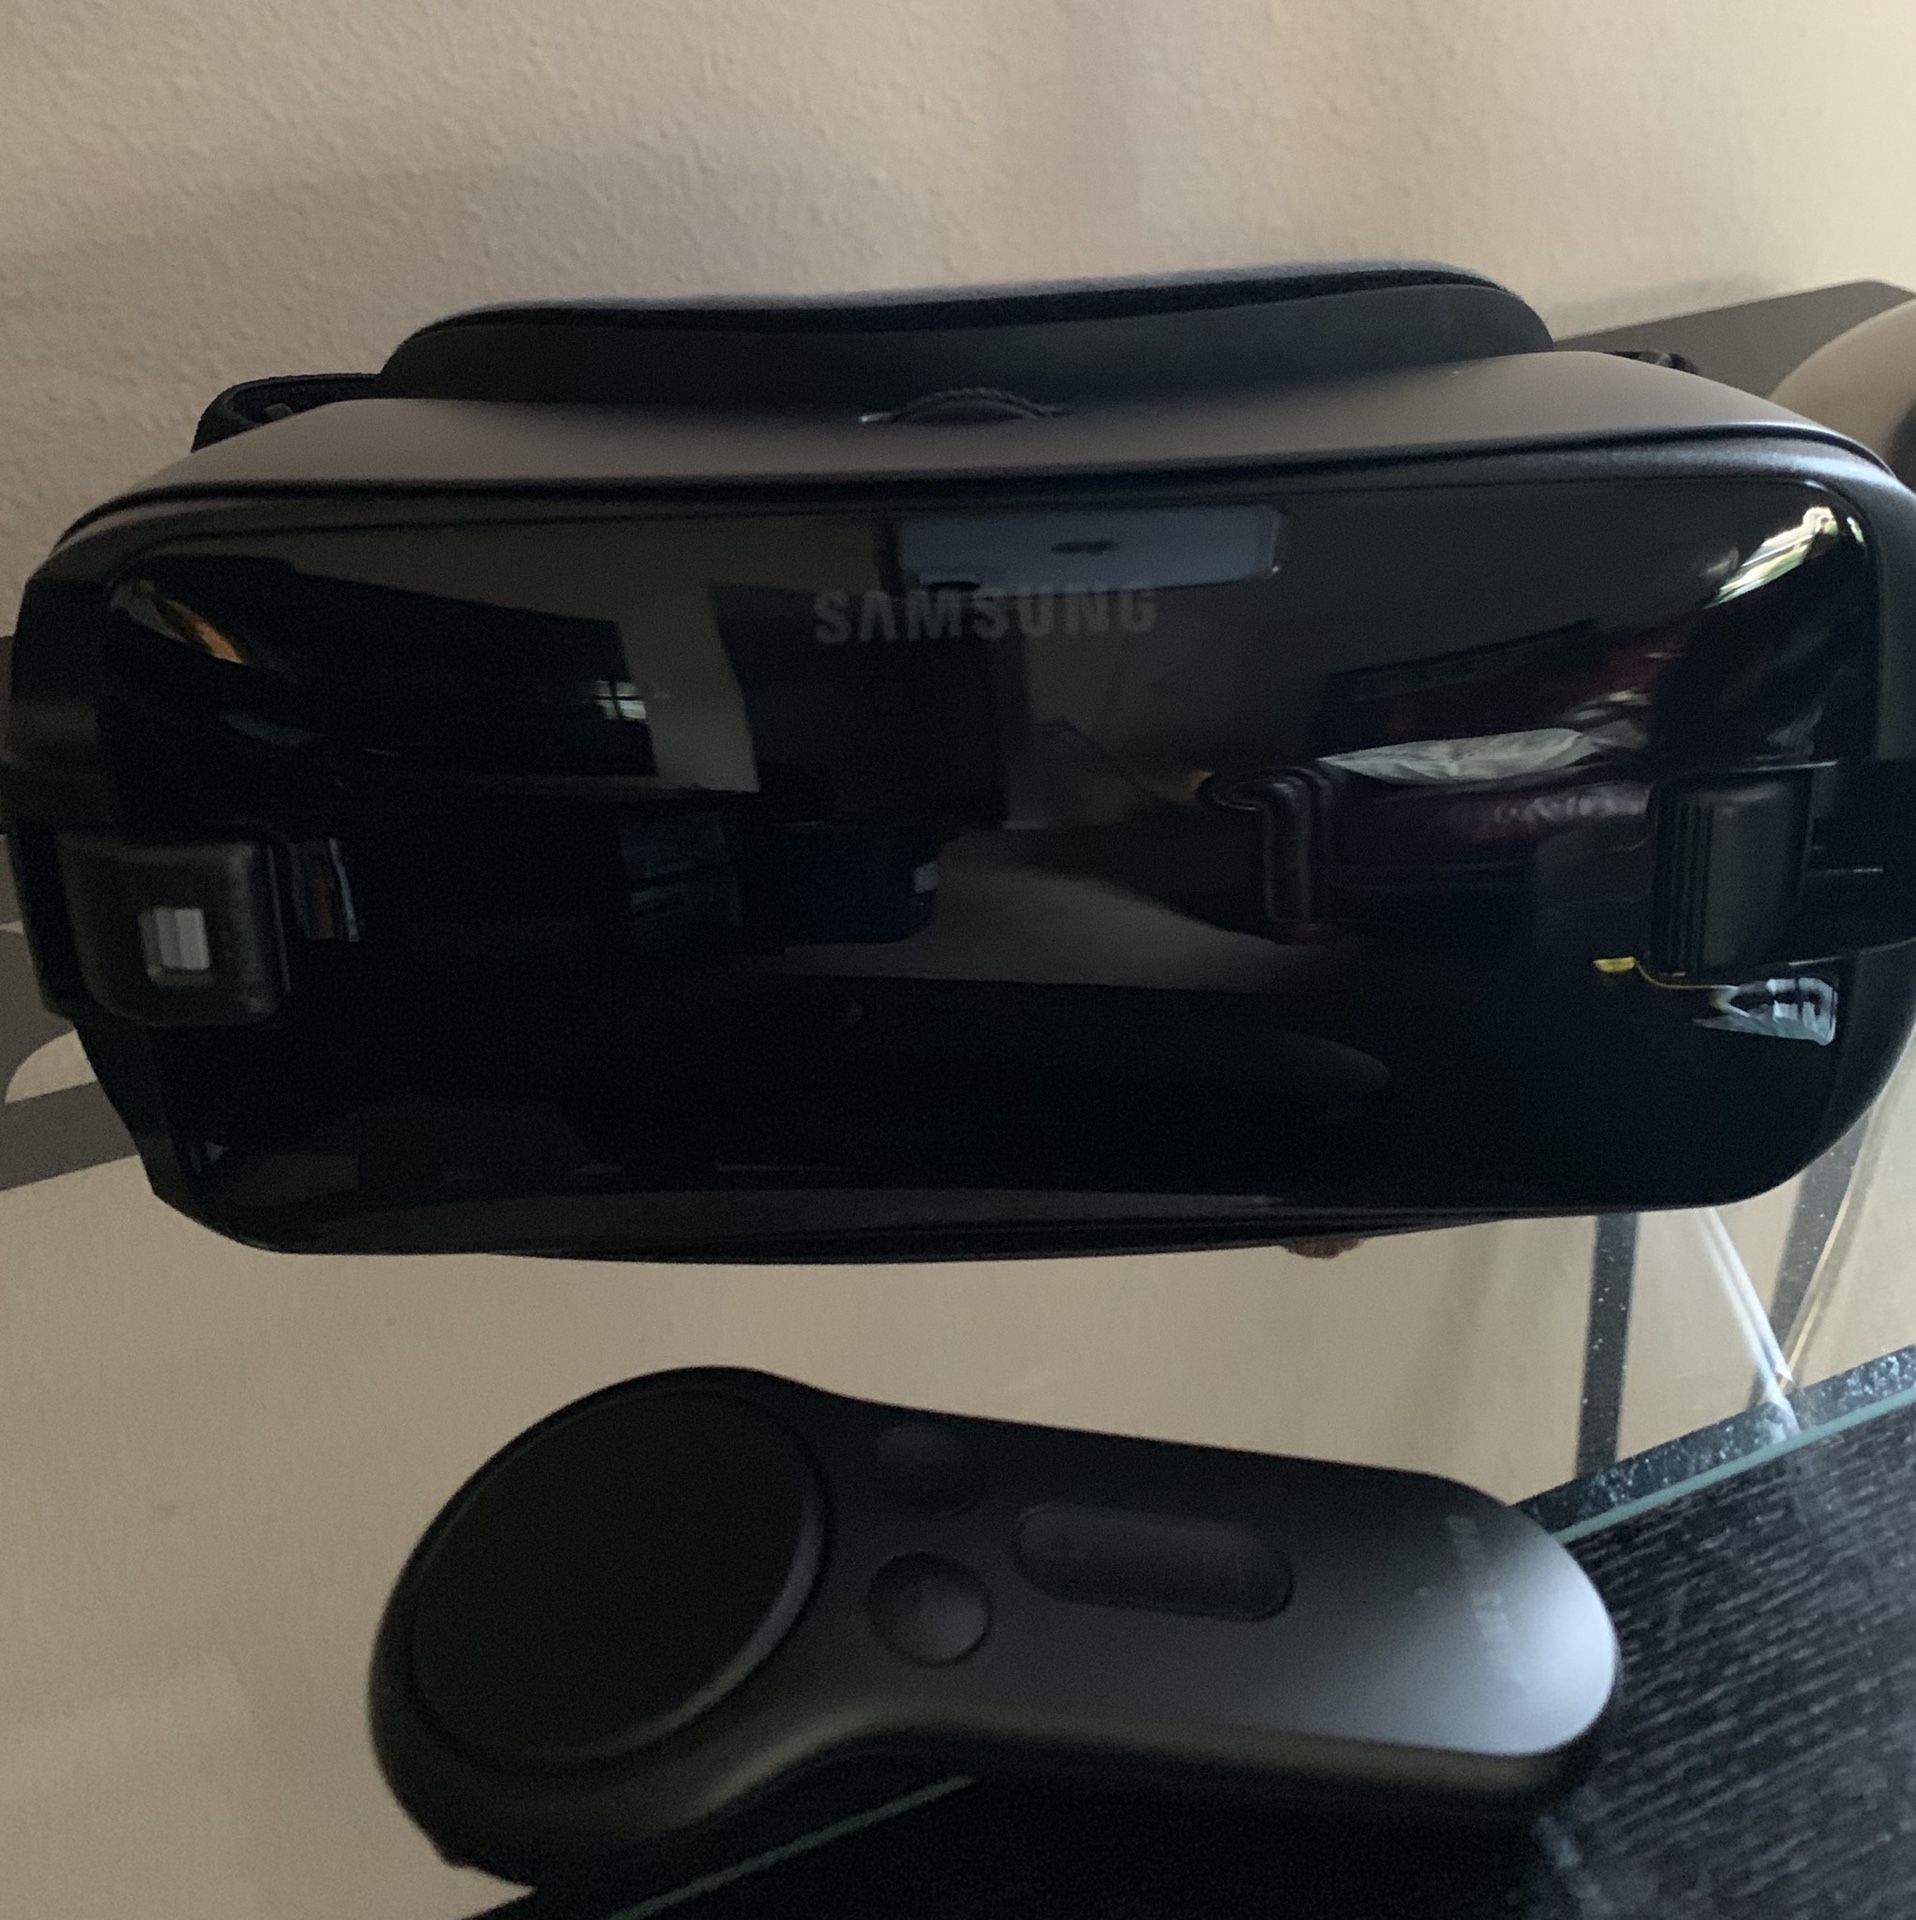 Samsung Oculus VR with remote